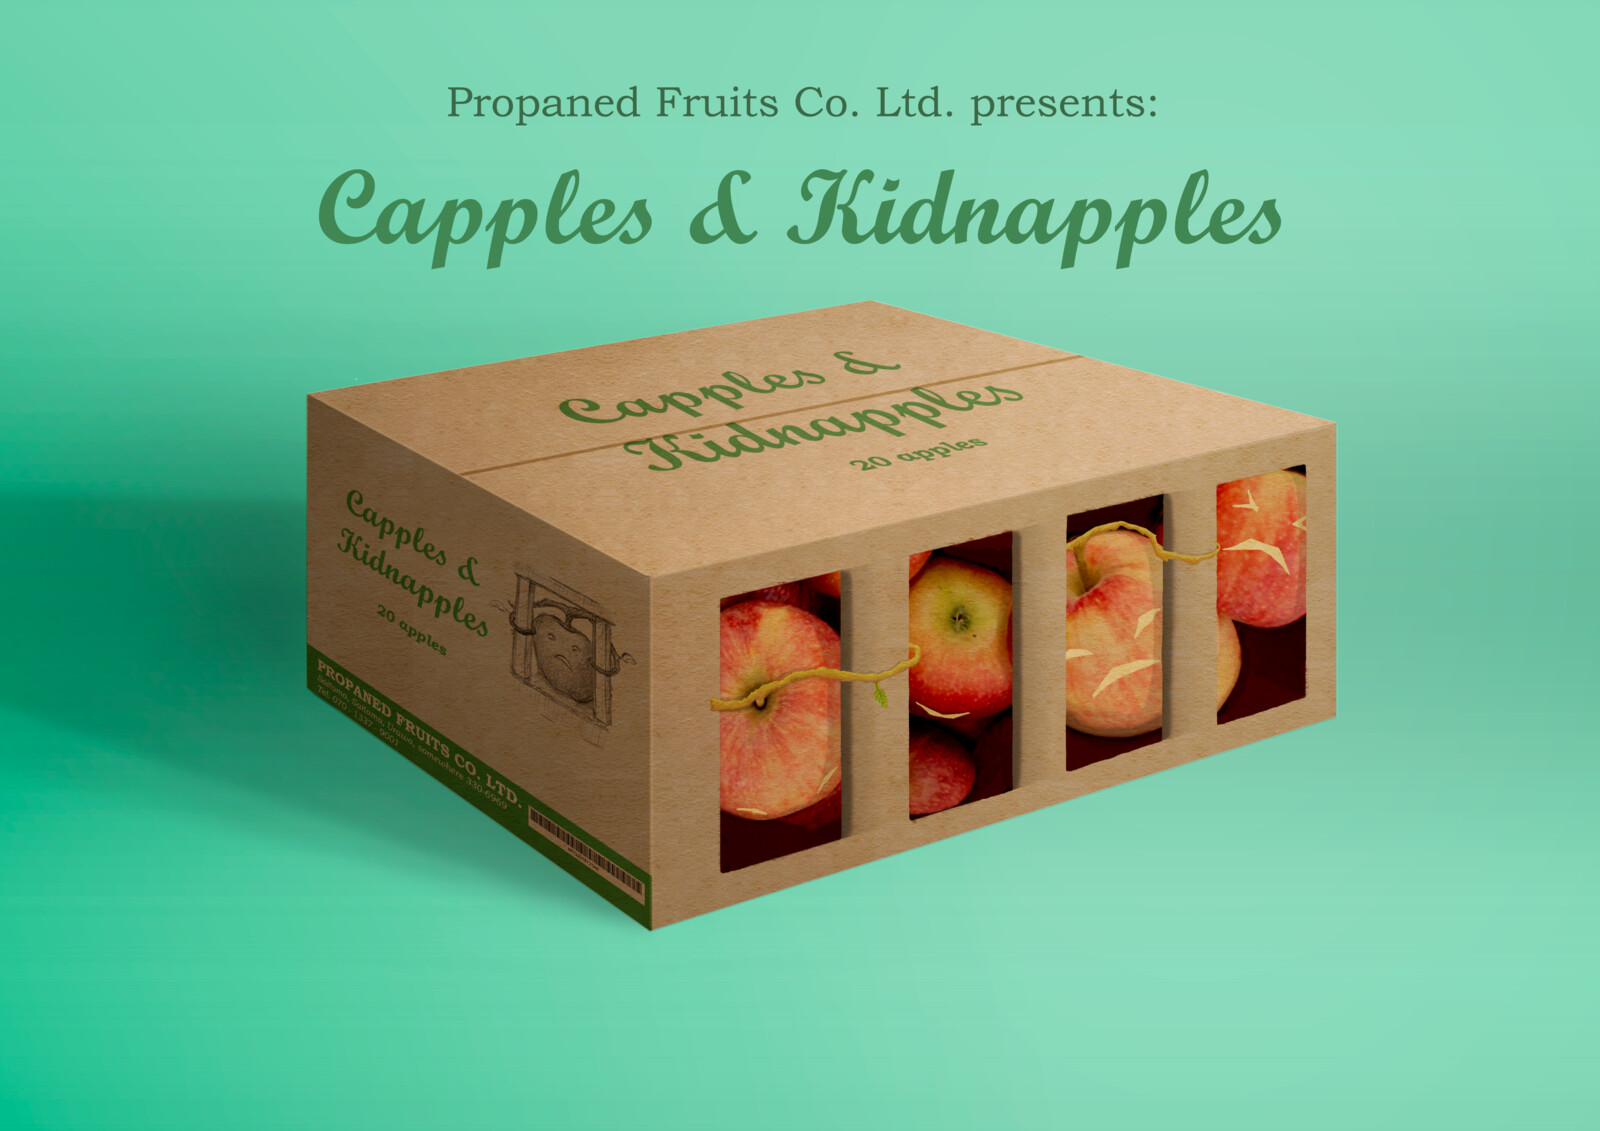 Credits:
Ms. Y - stolen apples, stolen soul
Vectorium (Freepik) - box PSD template
Mr. T - Box with cage bars (Adobe Illustrator)